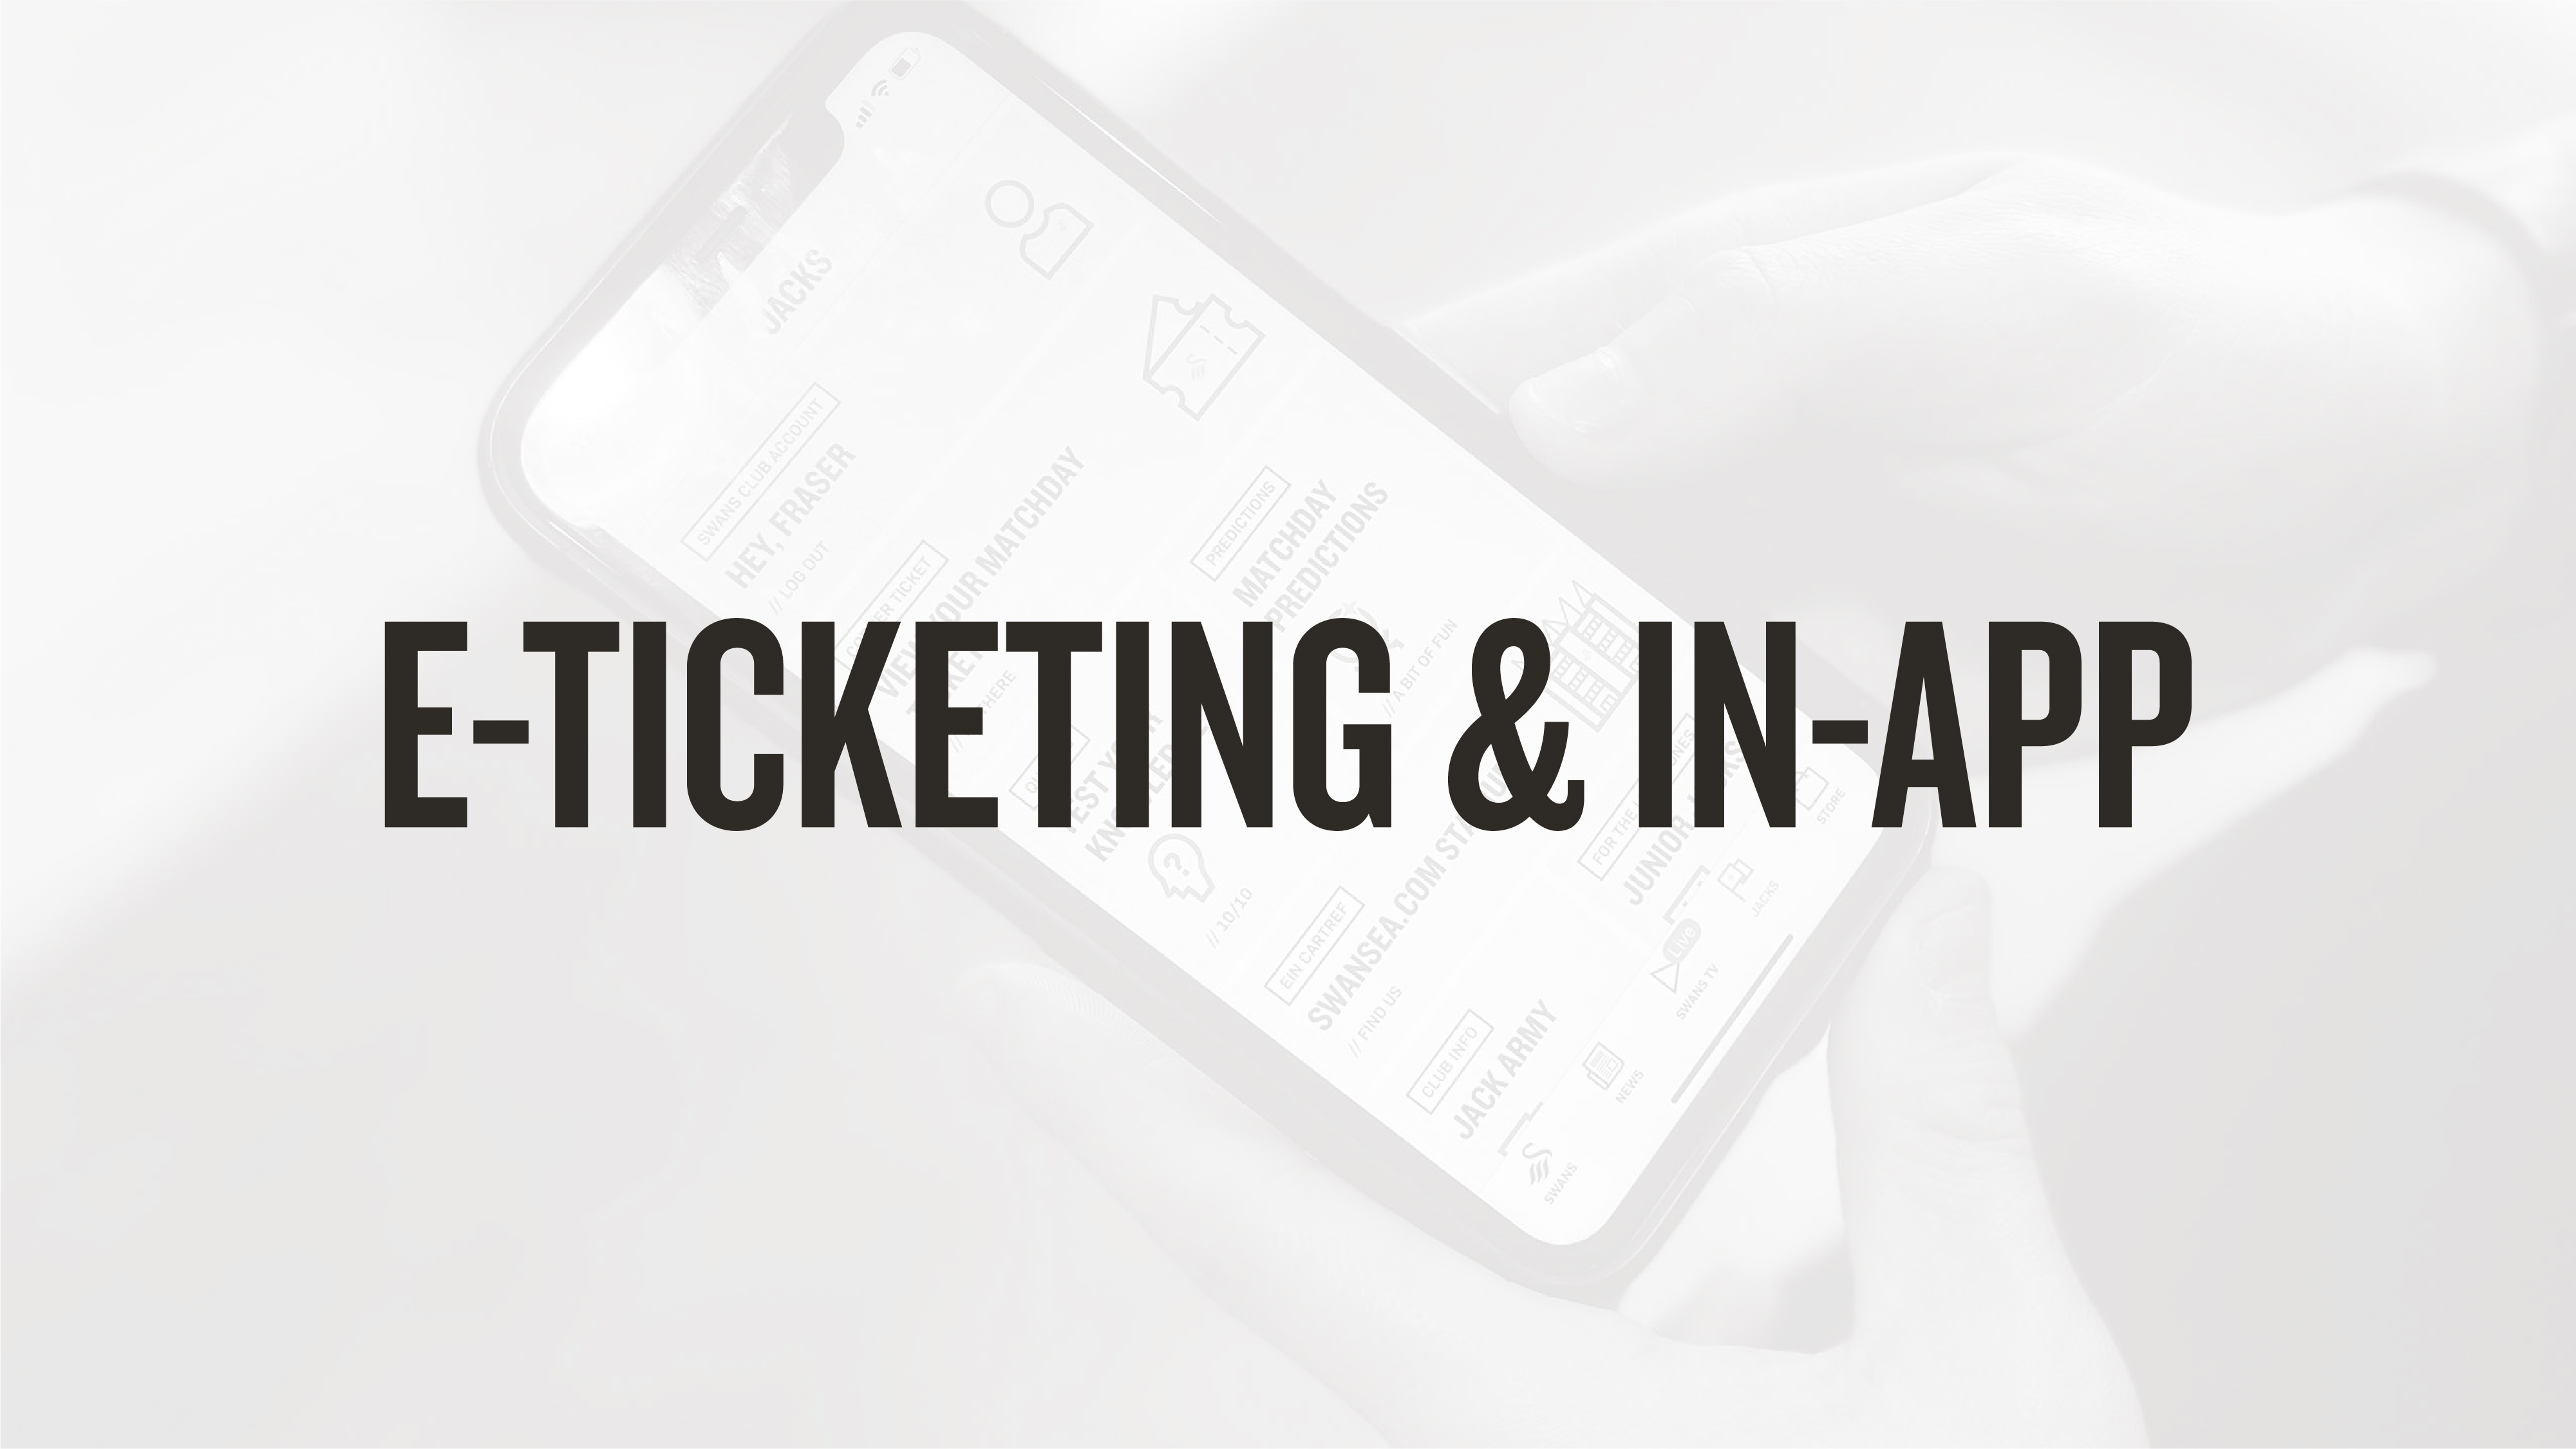 E-ticketing & in-app